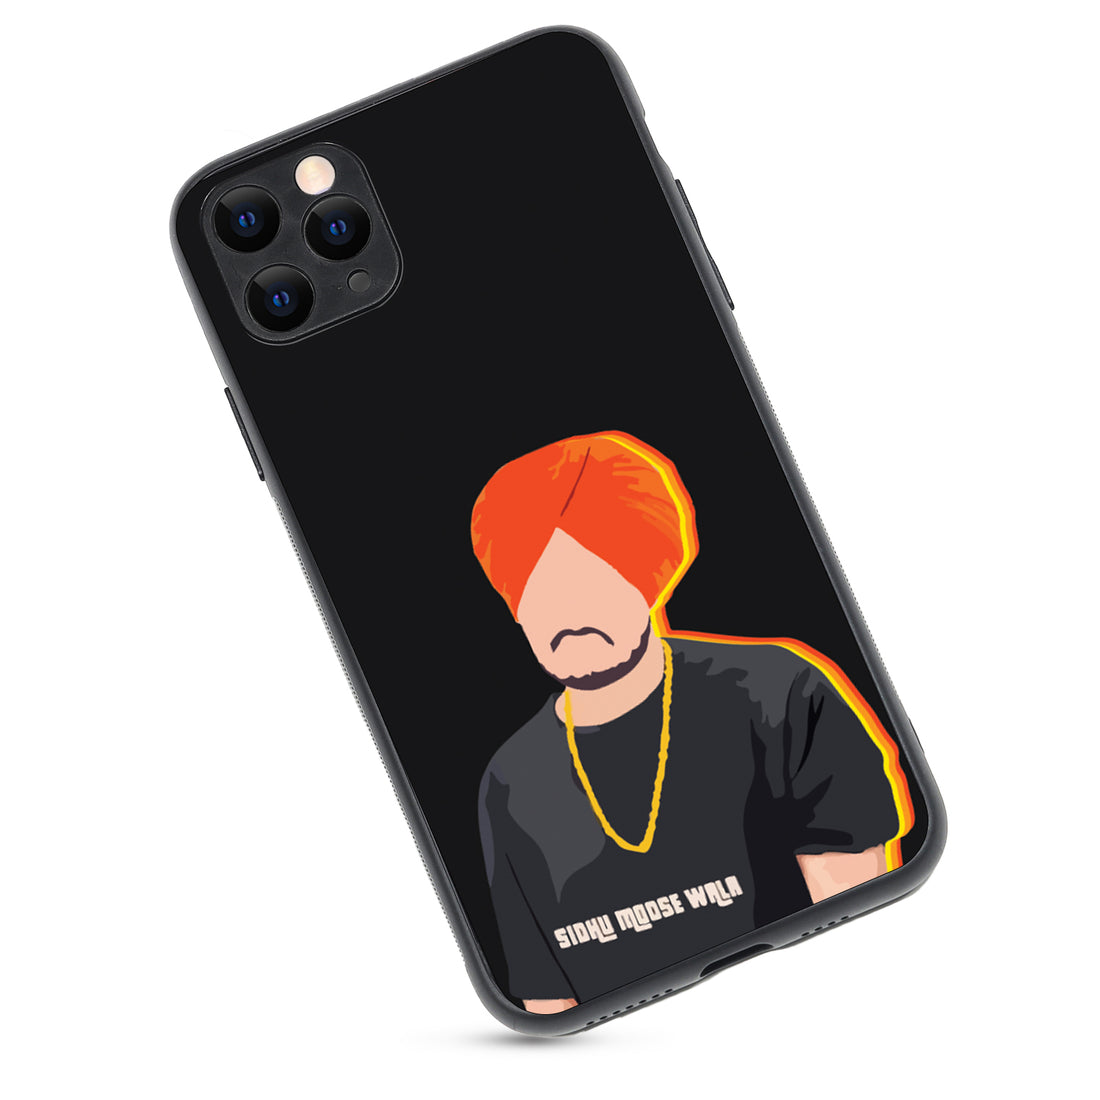 Rapper Sidhu Moosewala iPhone 11 Pro Max Case